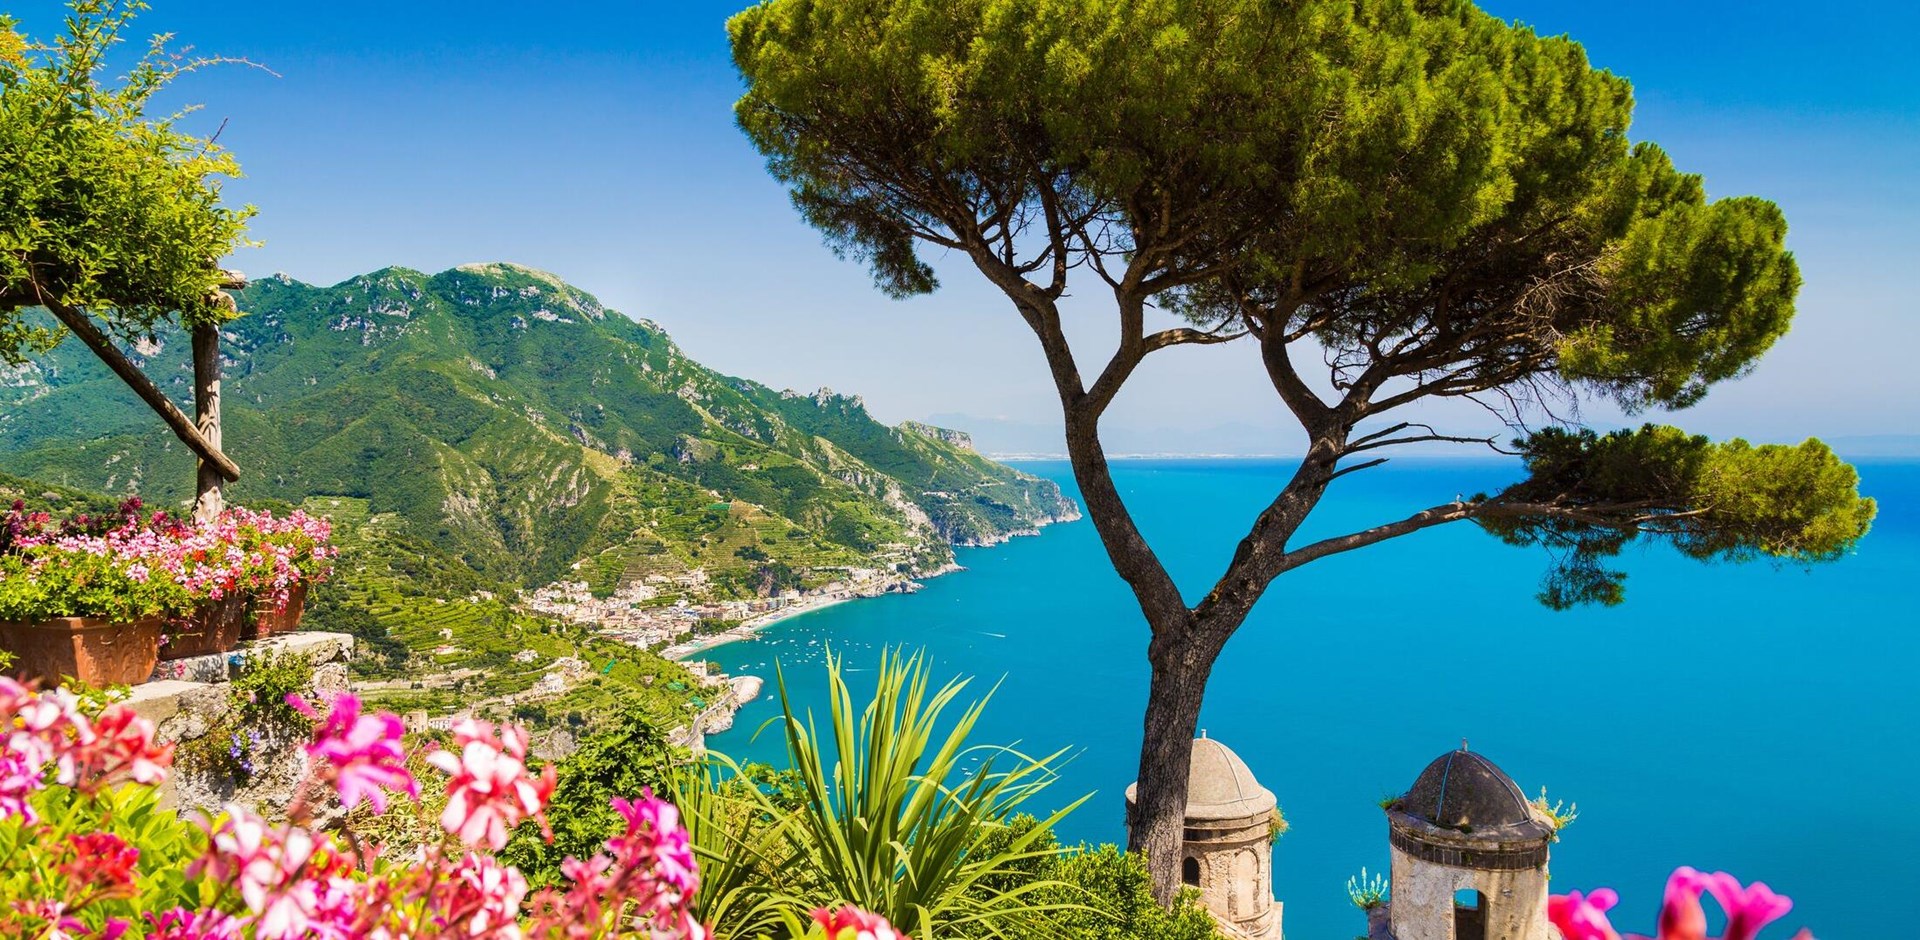 Scenic picture-postcard view of famous Amalfi Coast with Gulf of Salerno from Villa Rufolo gardens in Ravello, Campania, Italy